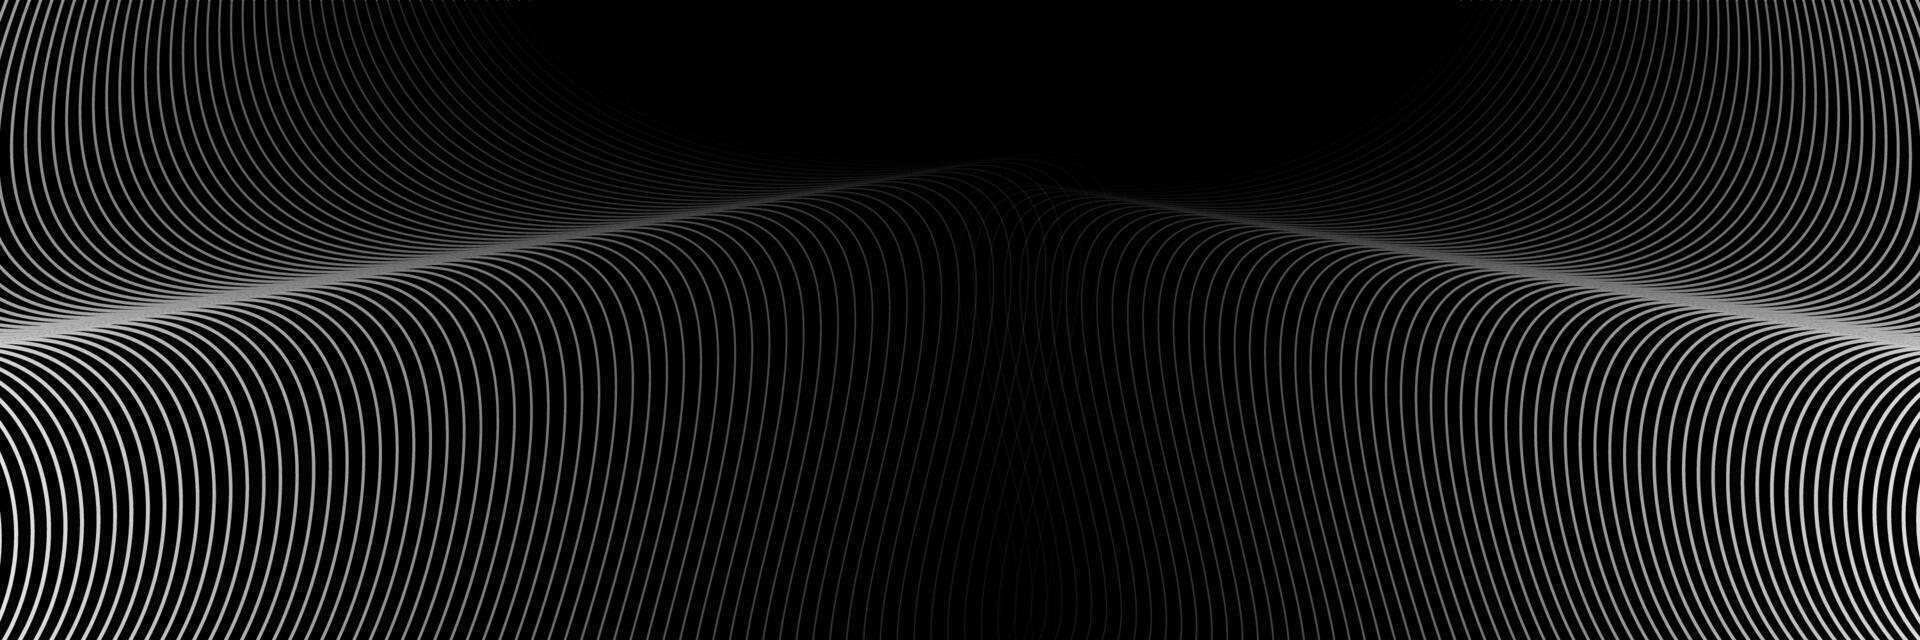 donker abstract achtergrond met gloeiend Golf. glimmend in beweging lijnen ontwerp element. futuristische technologie concept. vector illustratie